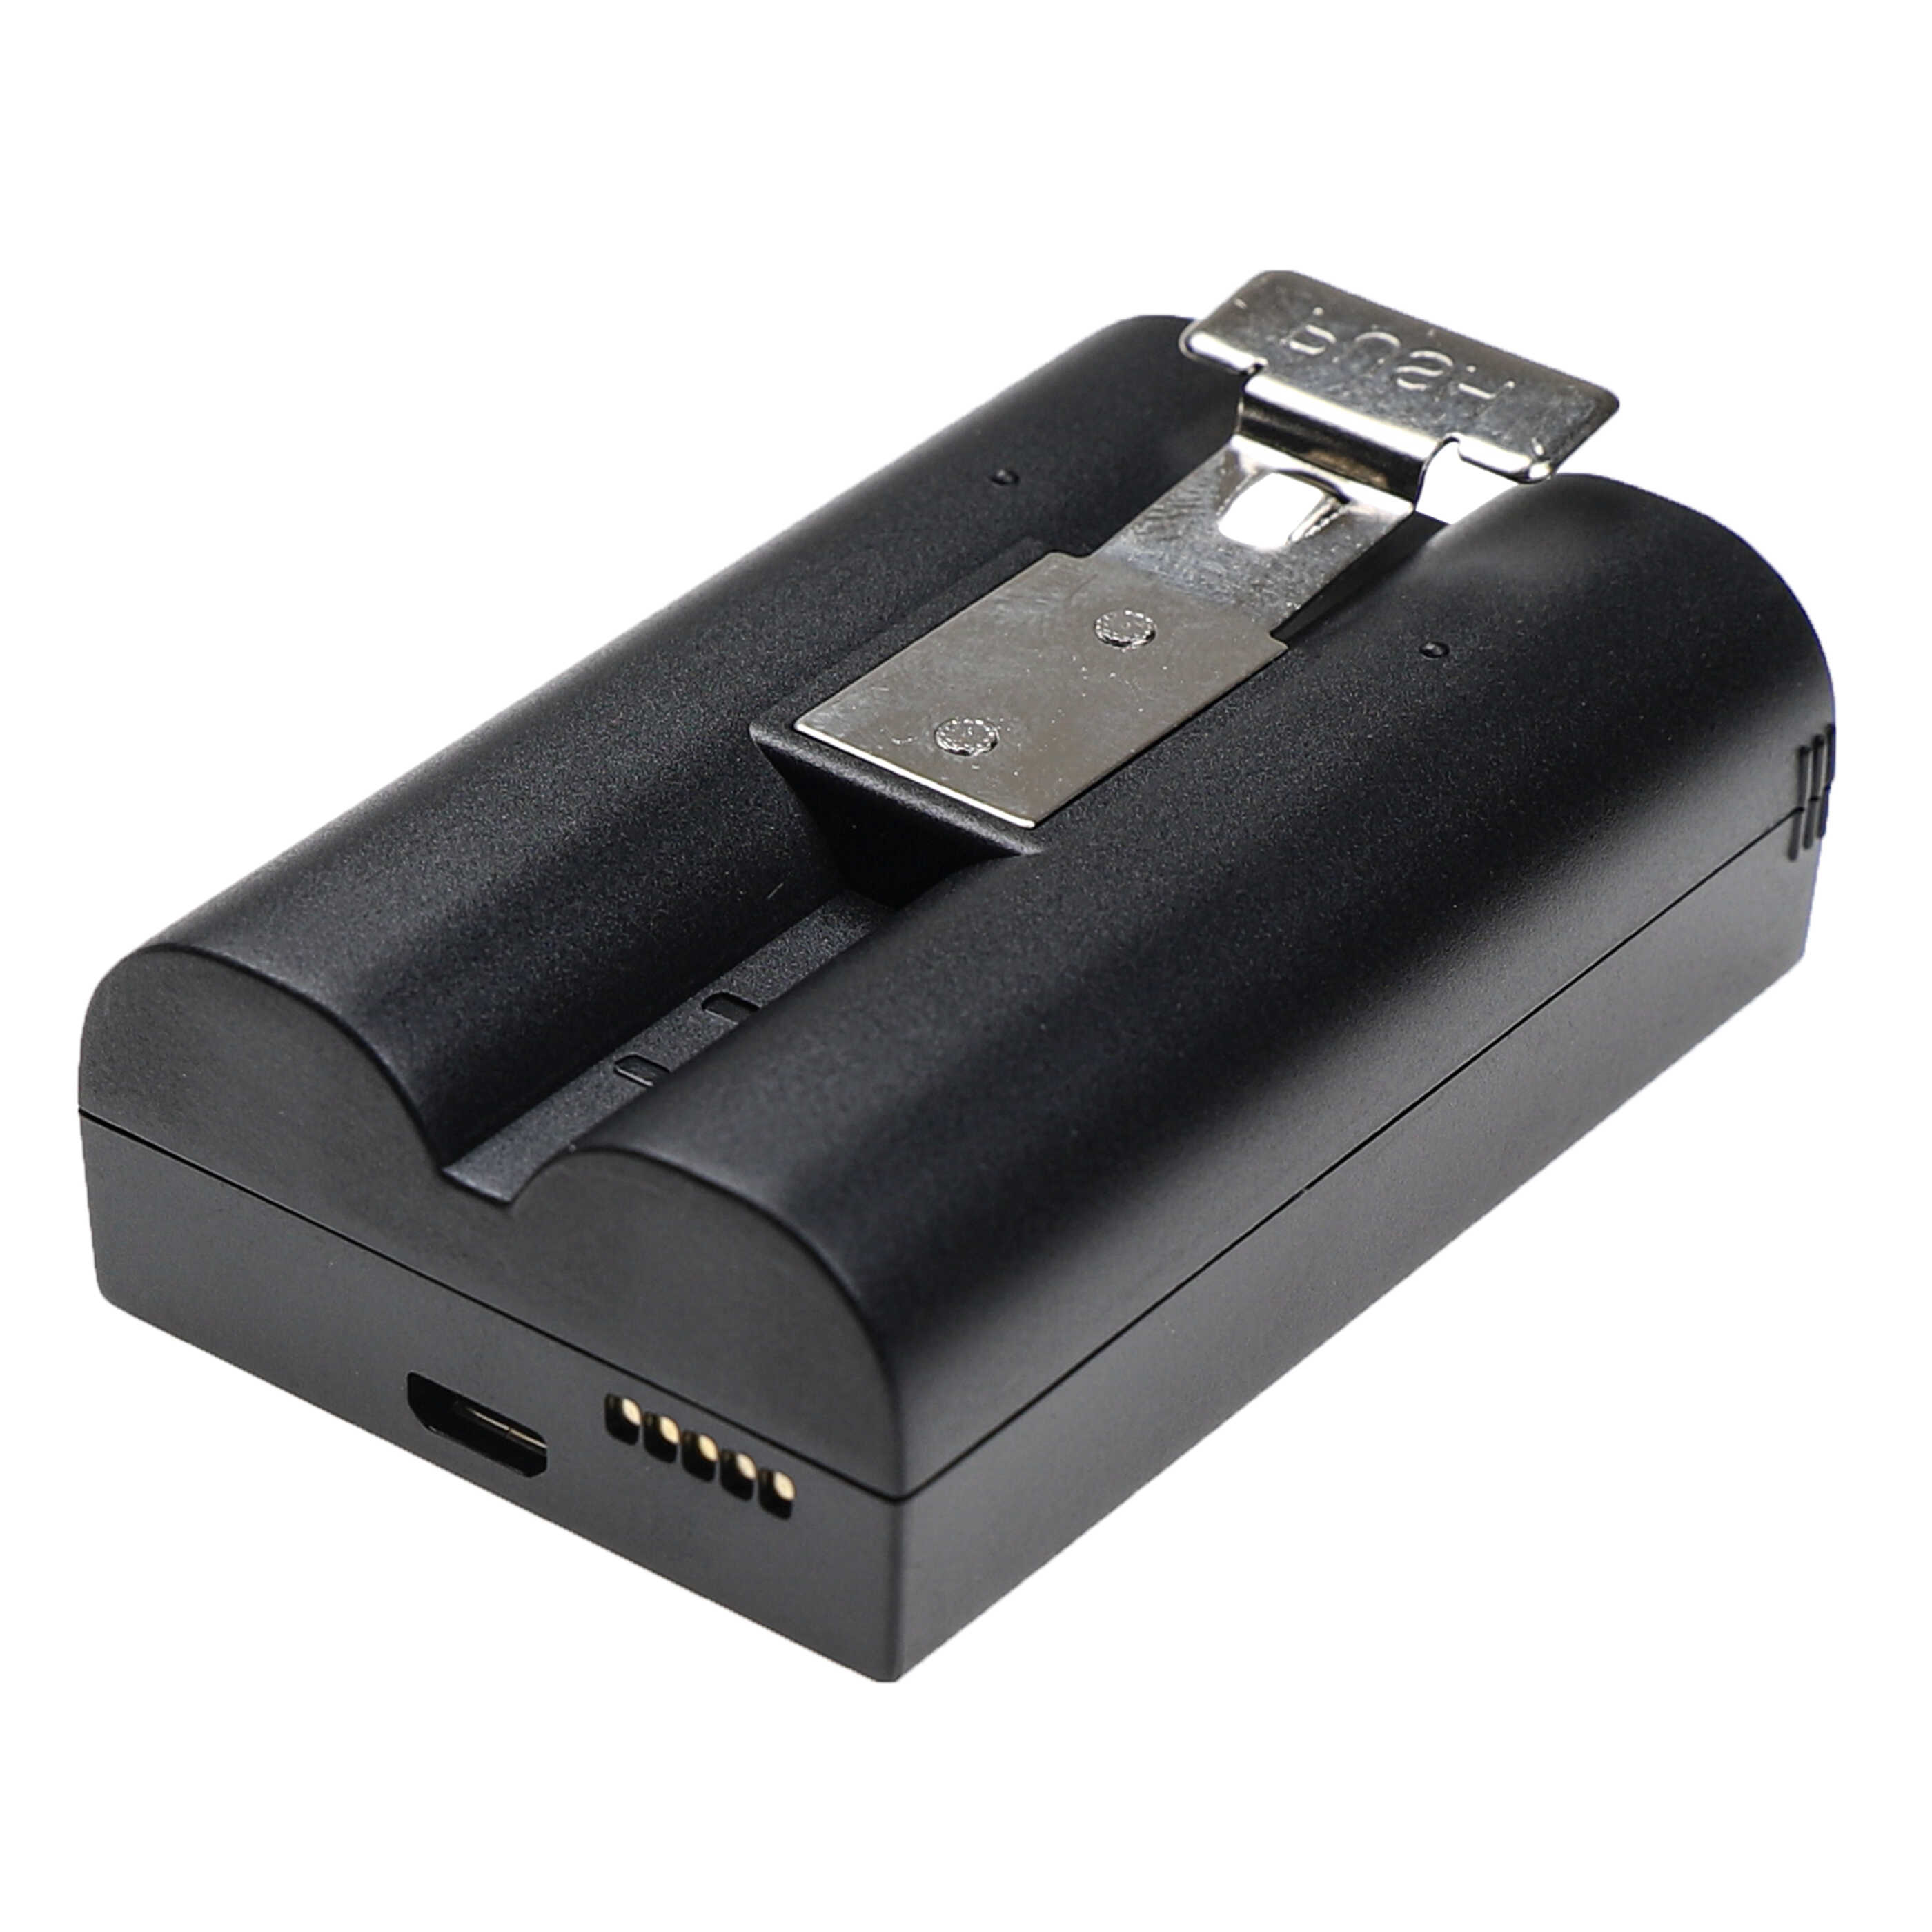 Intercom Doorbell Battery Replacement for Ring 8AB1S7-0EN0 - 6040mAh 3.65V Li-Ion